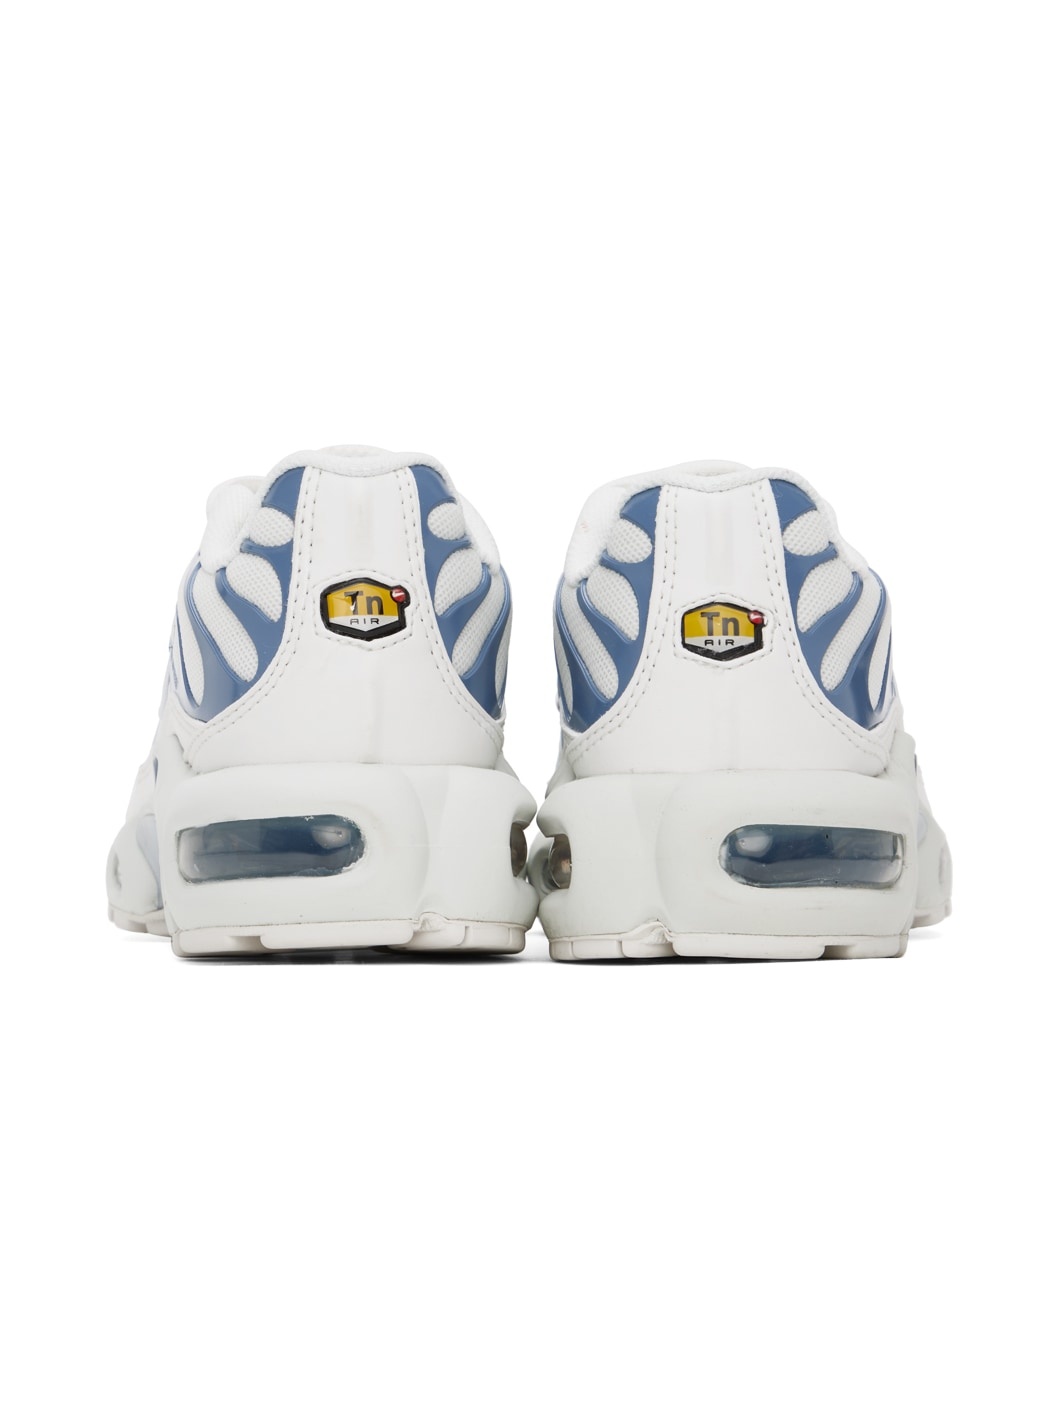 White & Blue Air Max Plus Sneakers - 2